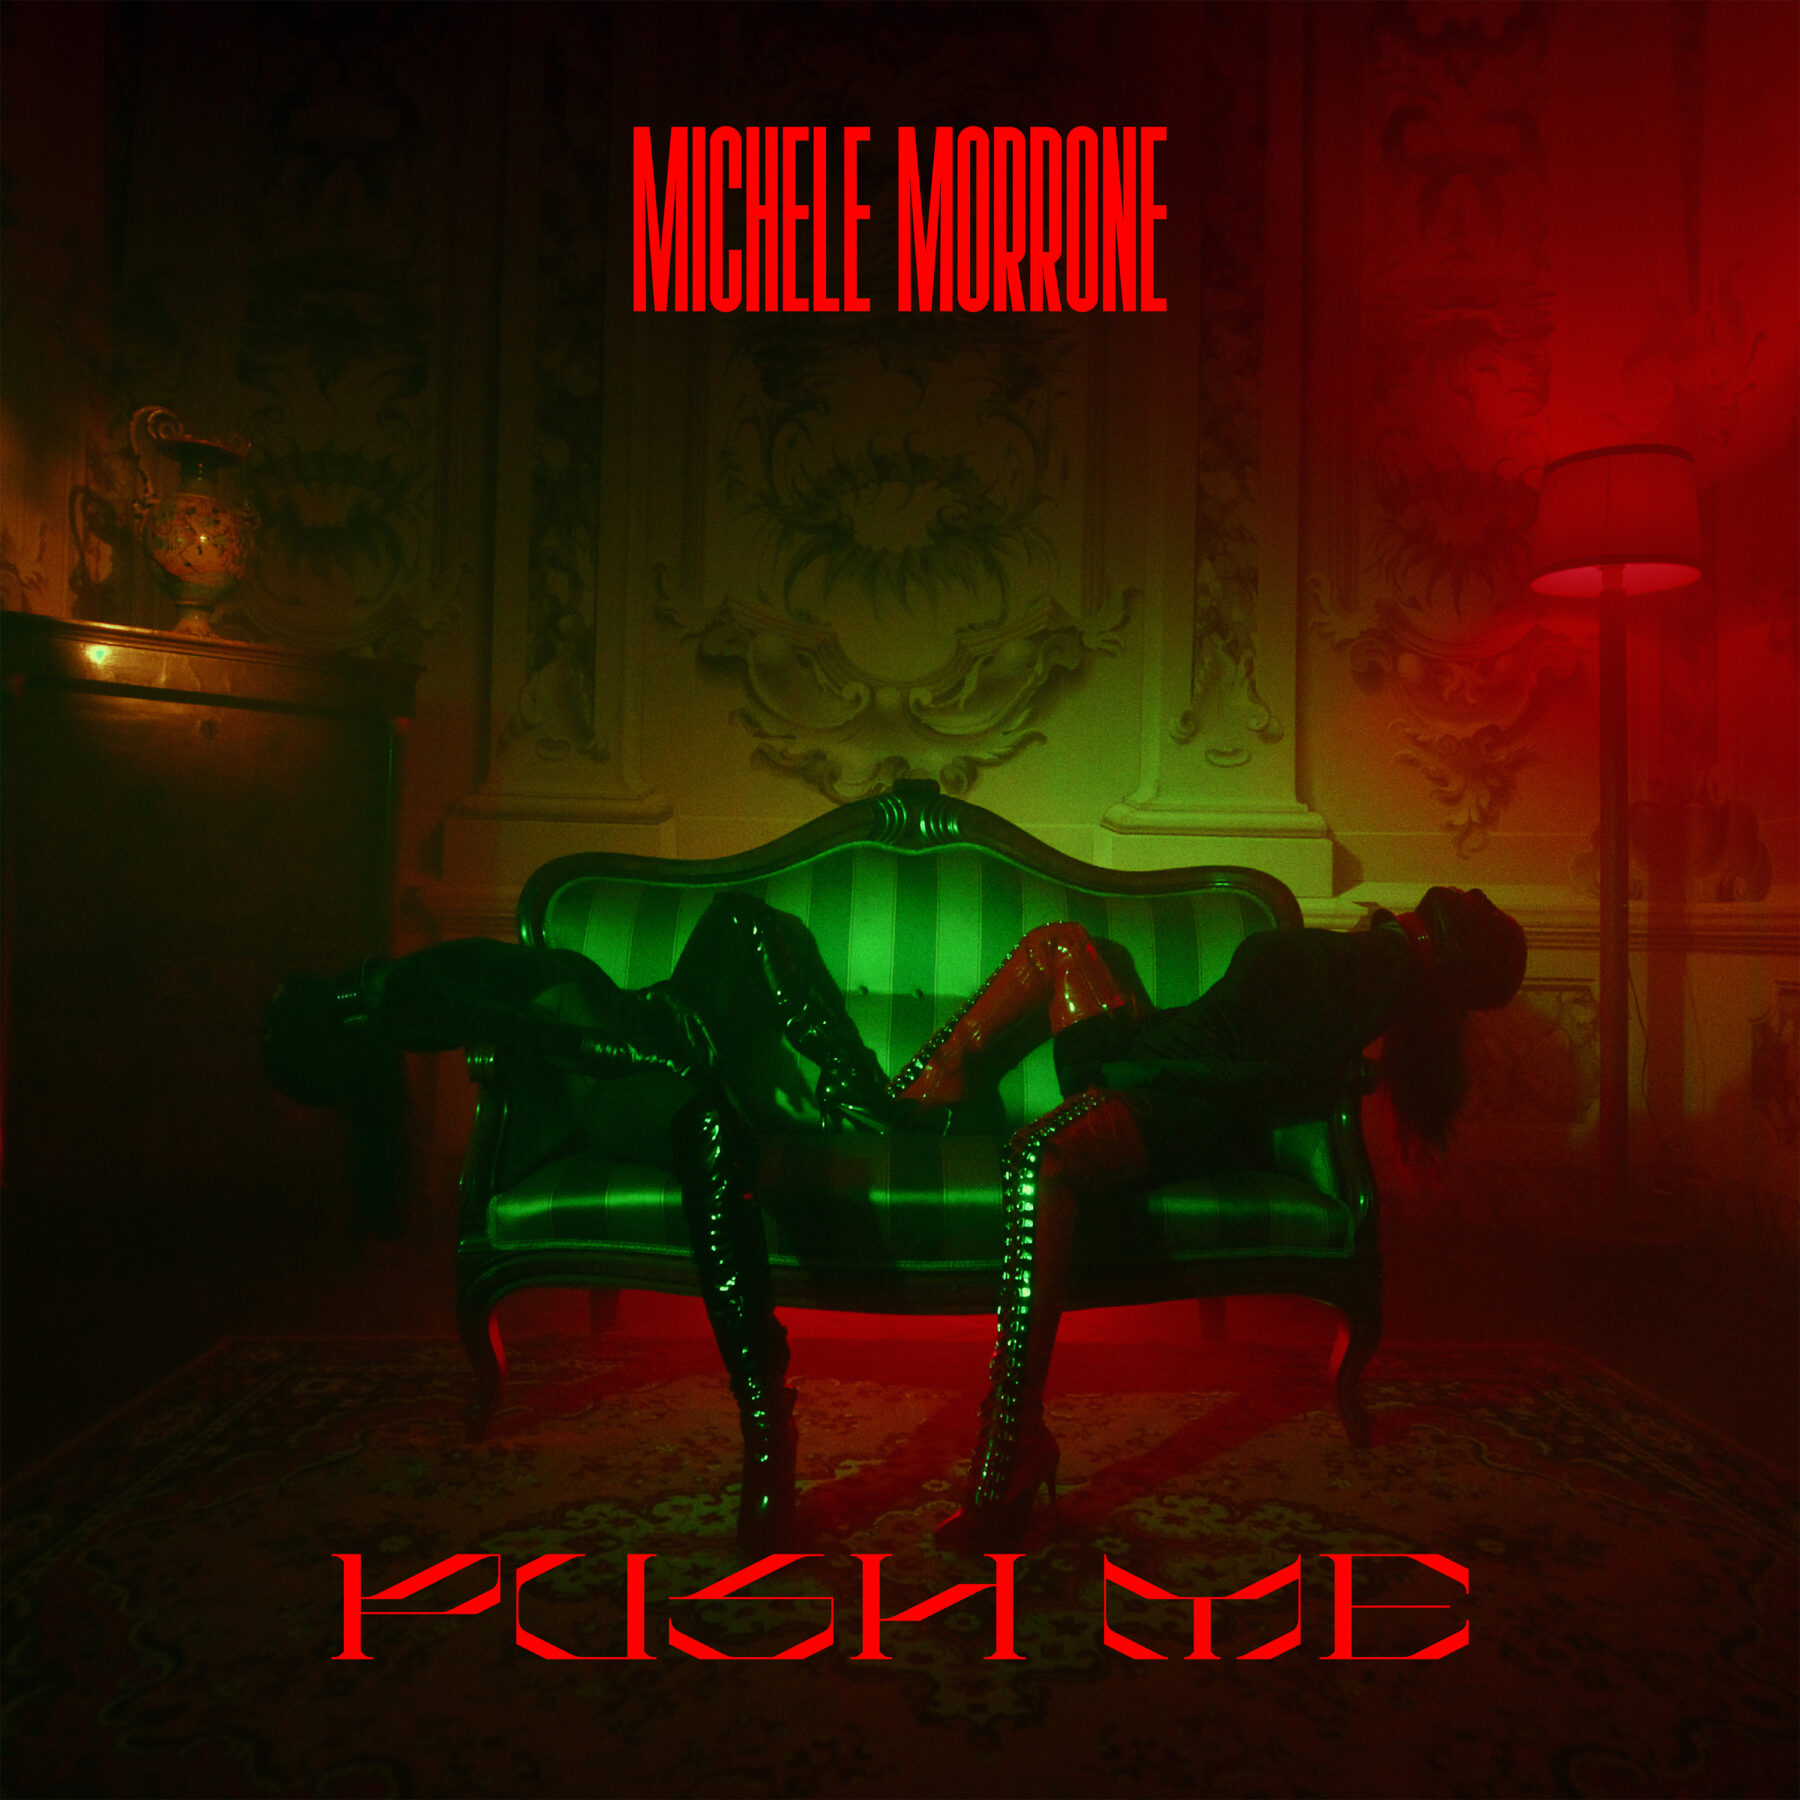 Michele Morrone - Push Me